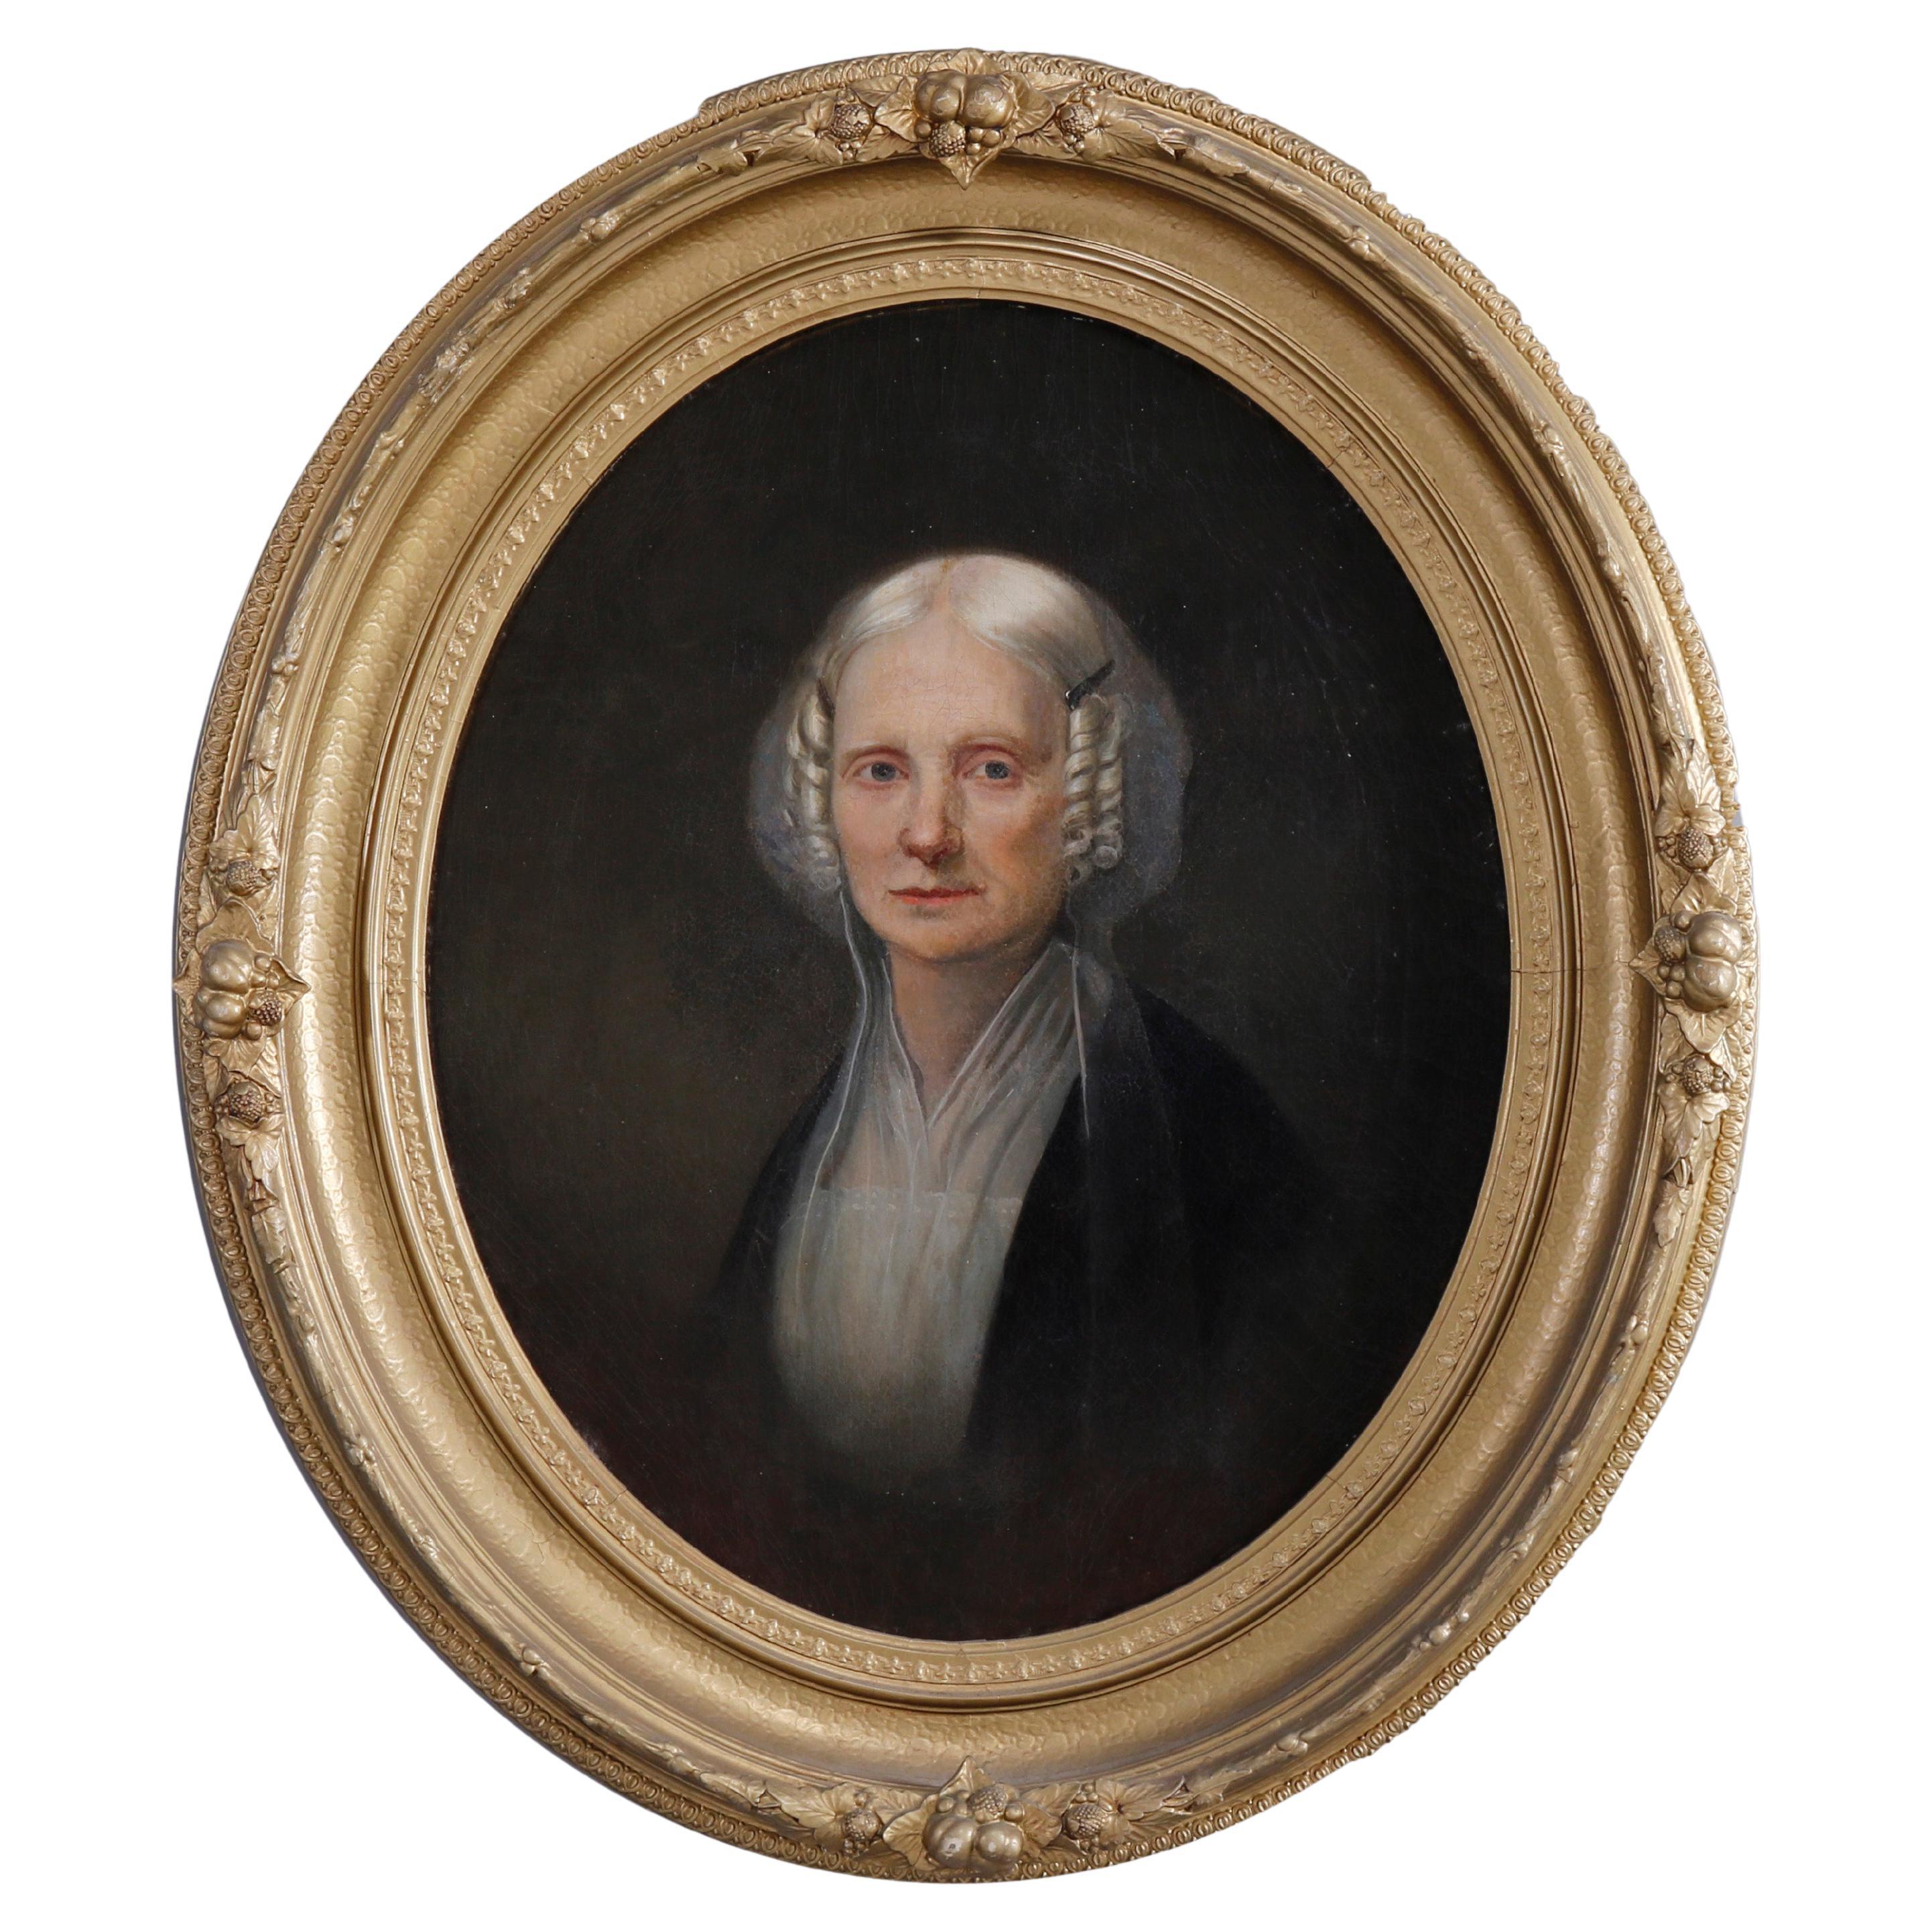 Antique Painting, Portrait of a Woman, Oval Gilt Wood Frame, c1880